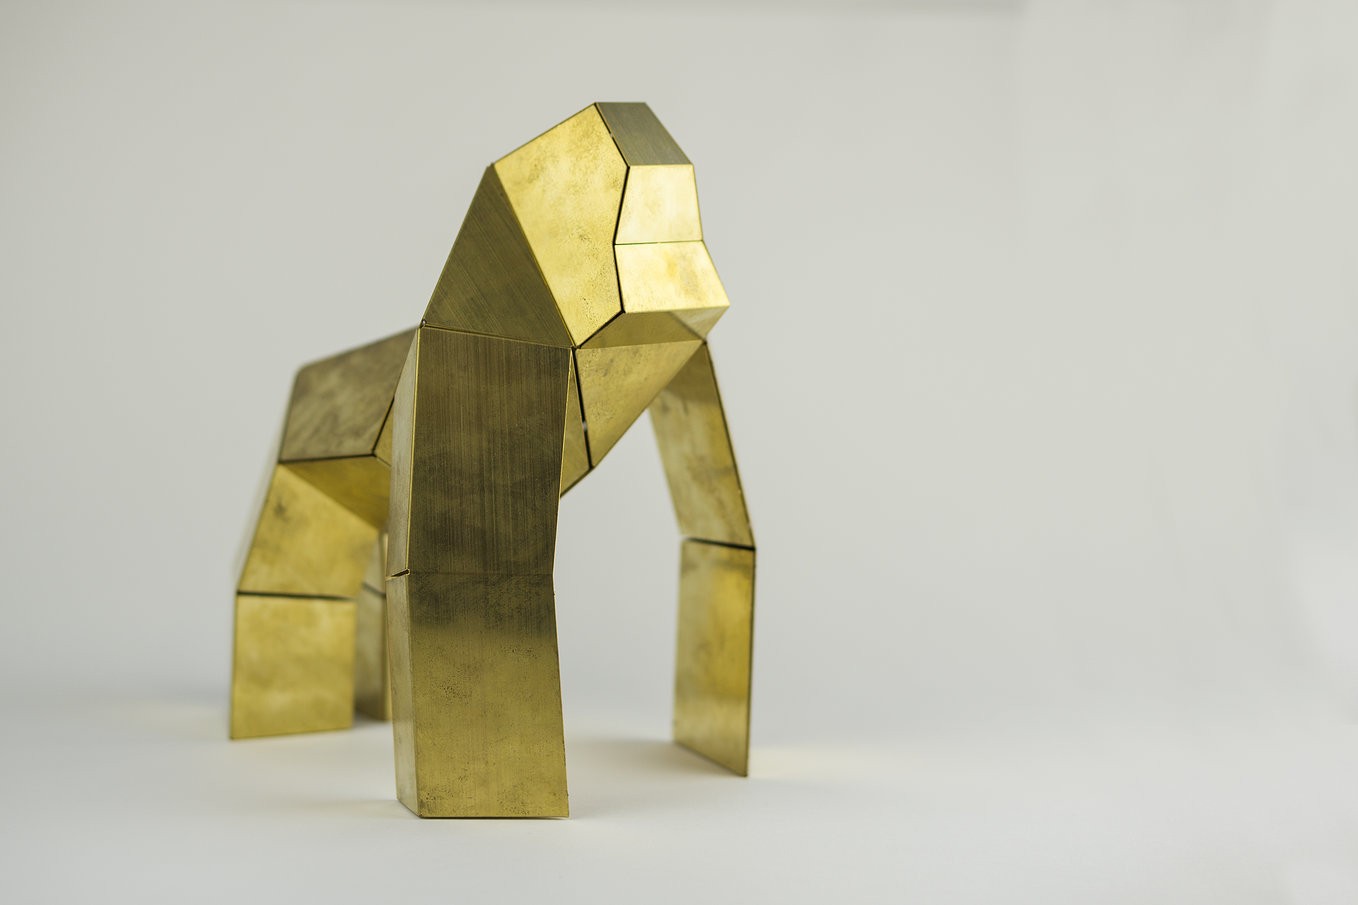 Gorillas Sculpture Imagination Minimalism Gold 1358x905